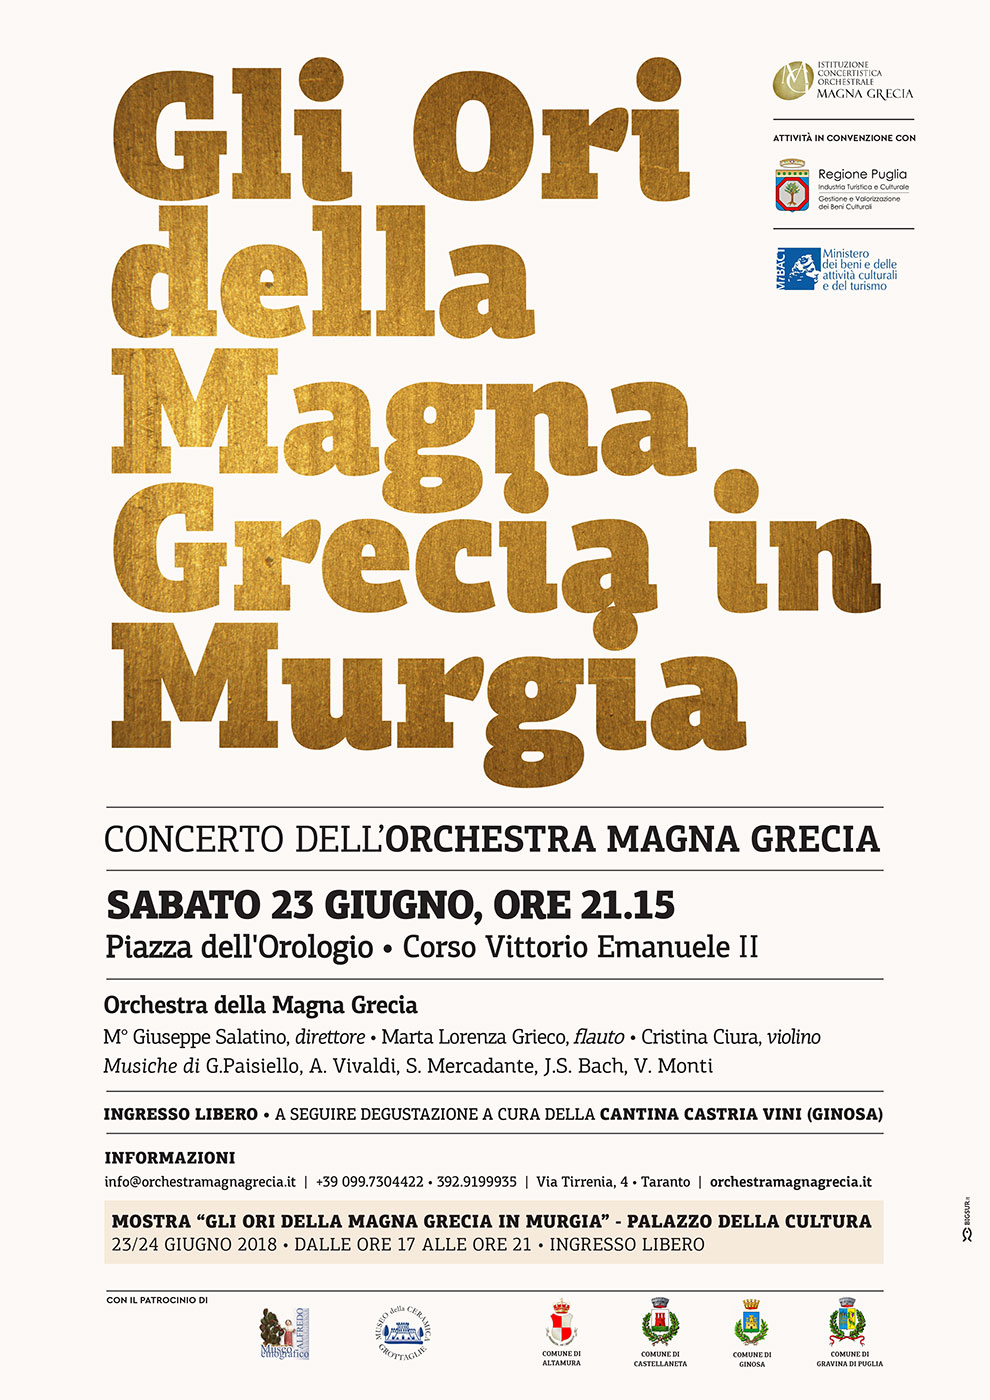 Our Apologia - Orchestra Magna Grecia